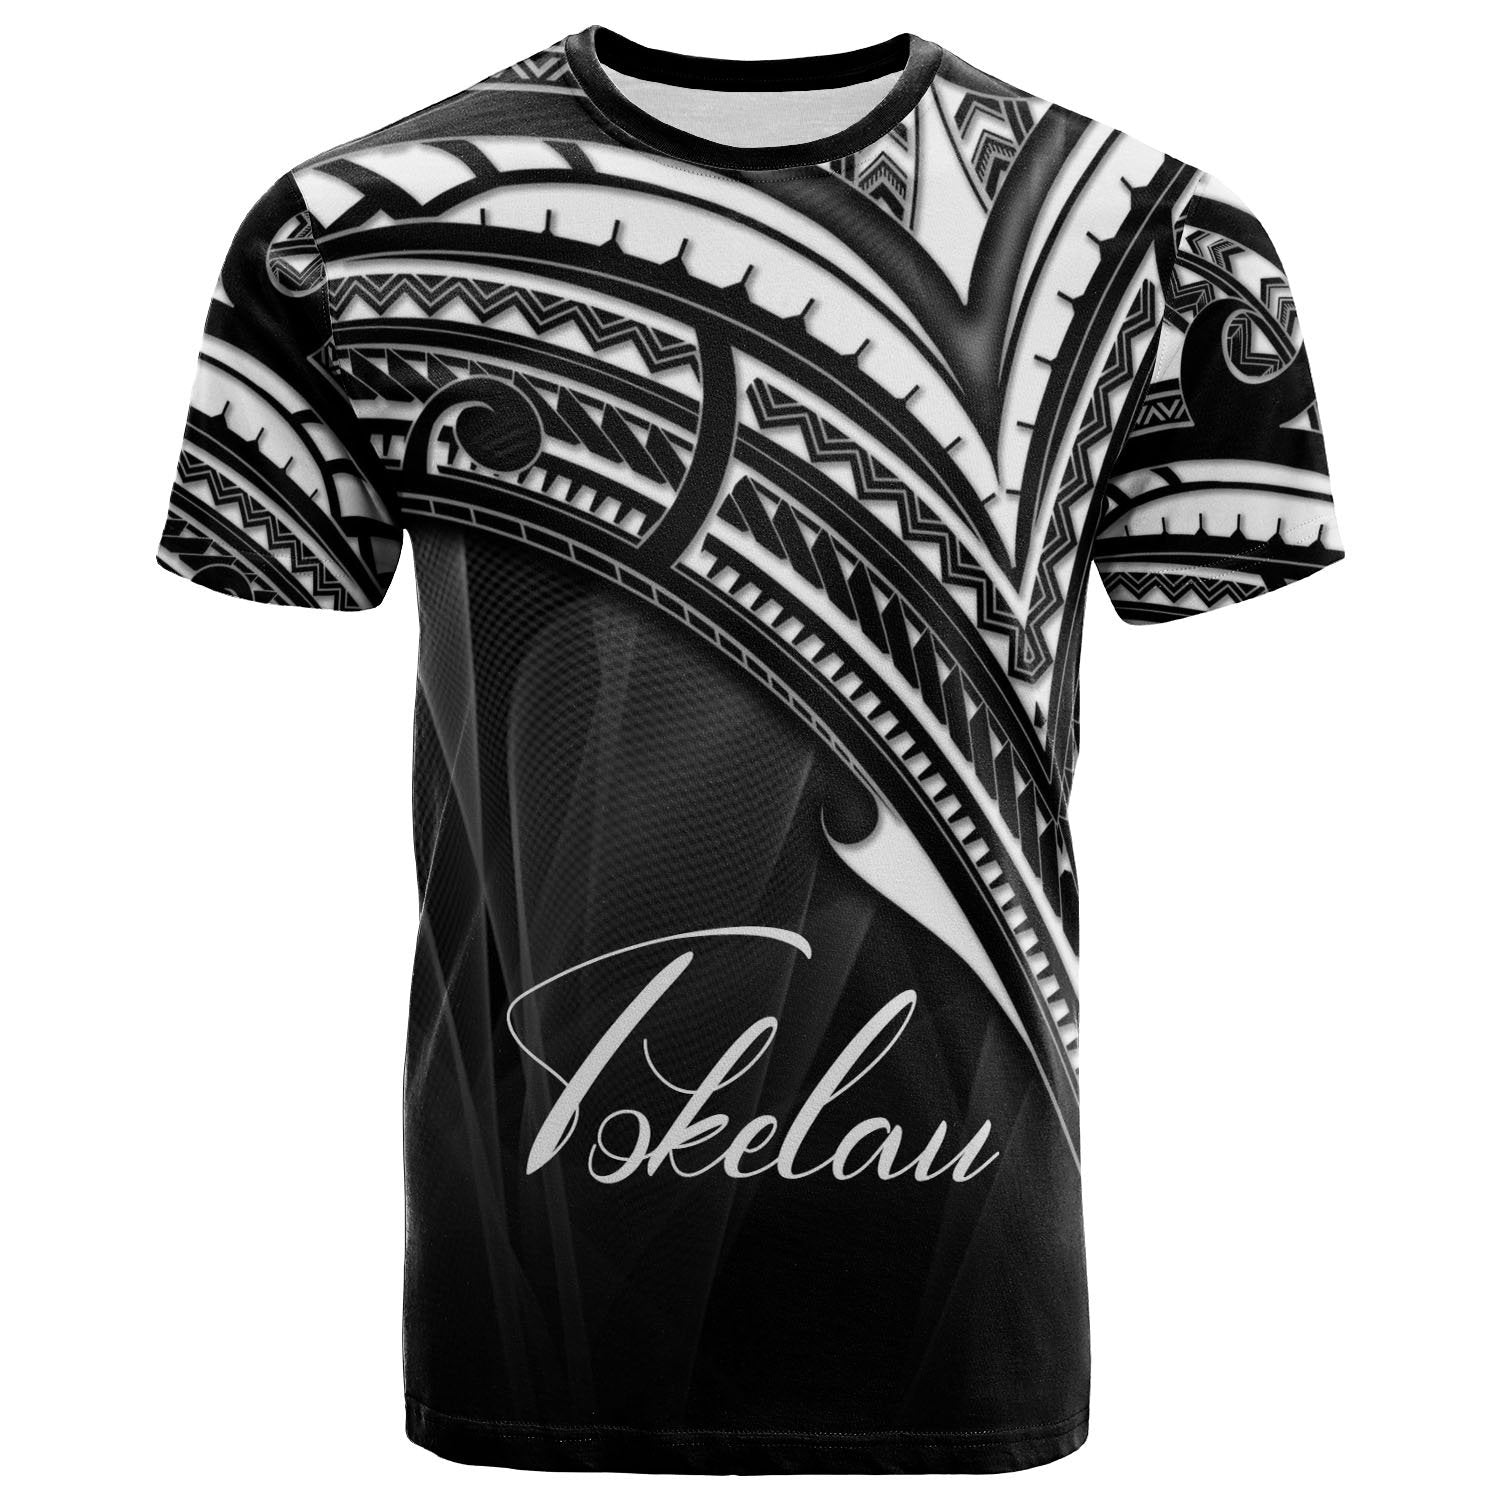 Tokelau T Shirt Cross Style Unisex Black - Polynesian Pride